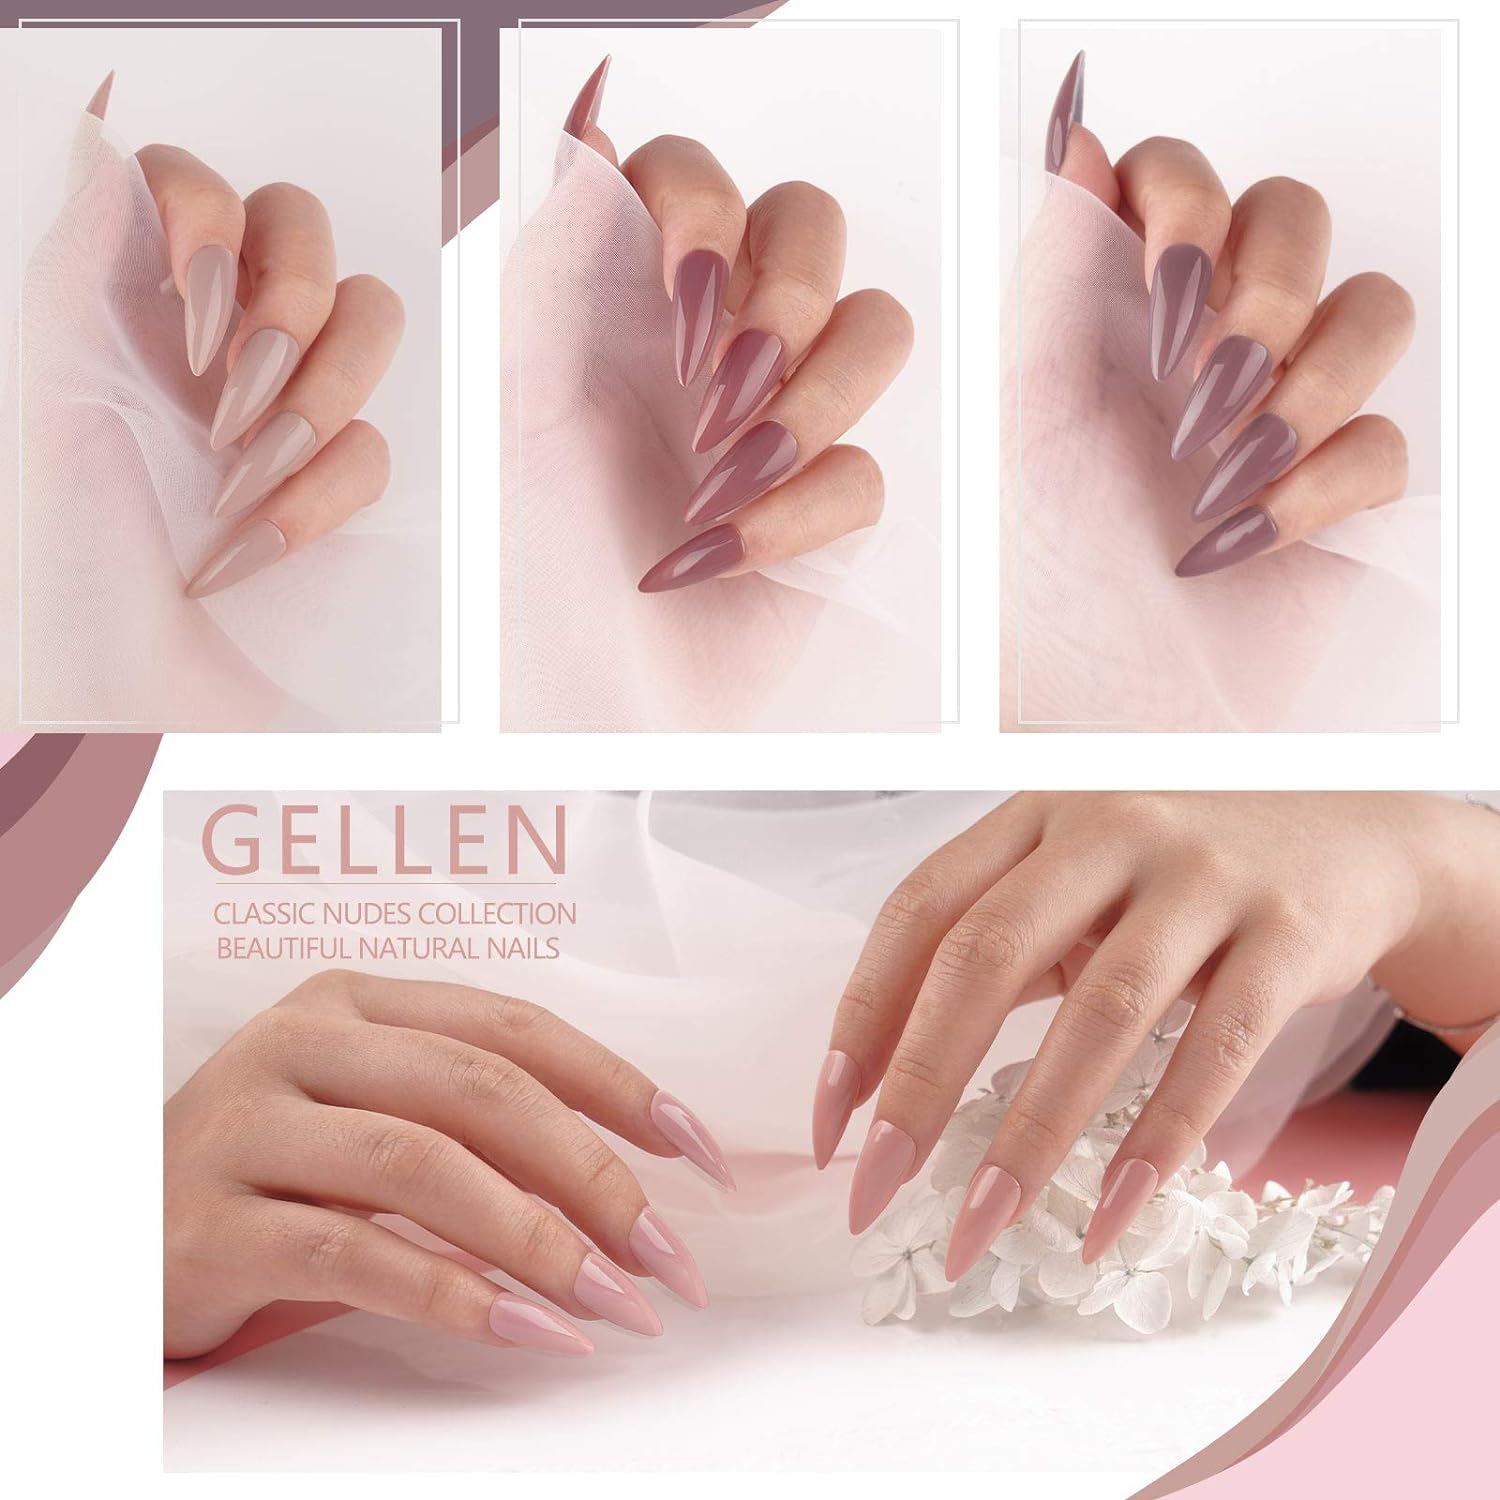  Gellen Gel Nail Polish Kit - 6 Colors Classic Nudes Series Natural Skin Tone, Trendy Pigmented Daily Nail Gel Shades Nail Art DIY Home Gel Manicure Set